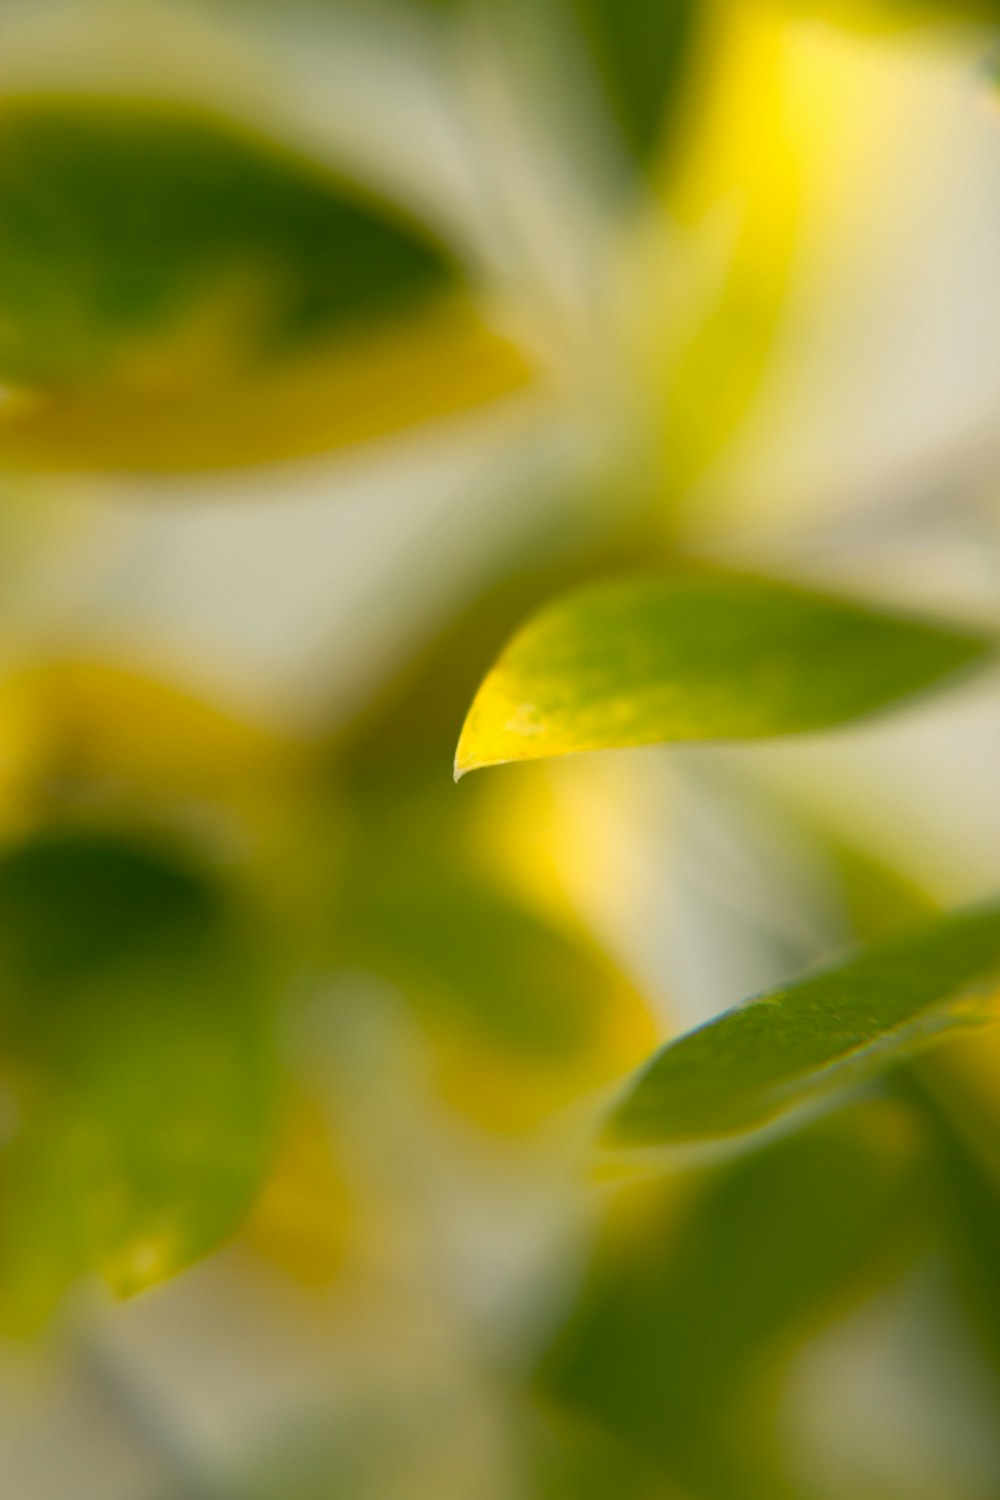 green leafed plant photo – Free Green Image on Unsplash